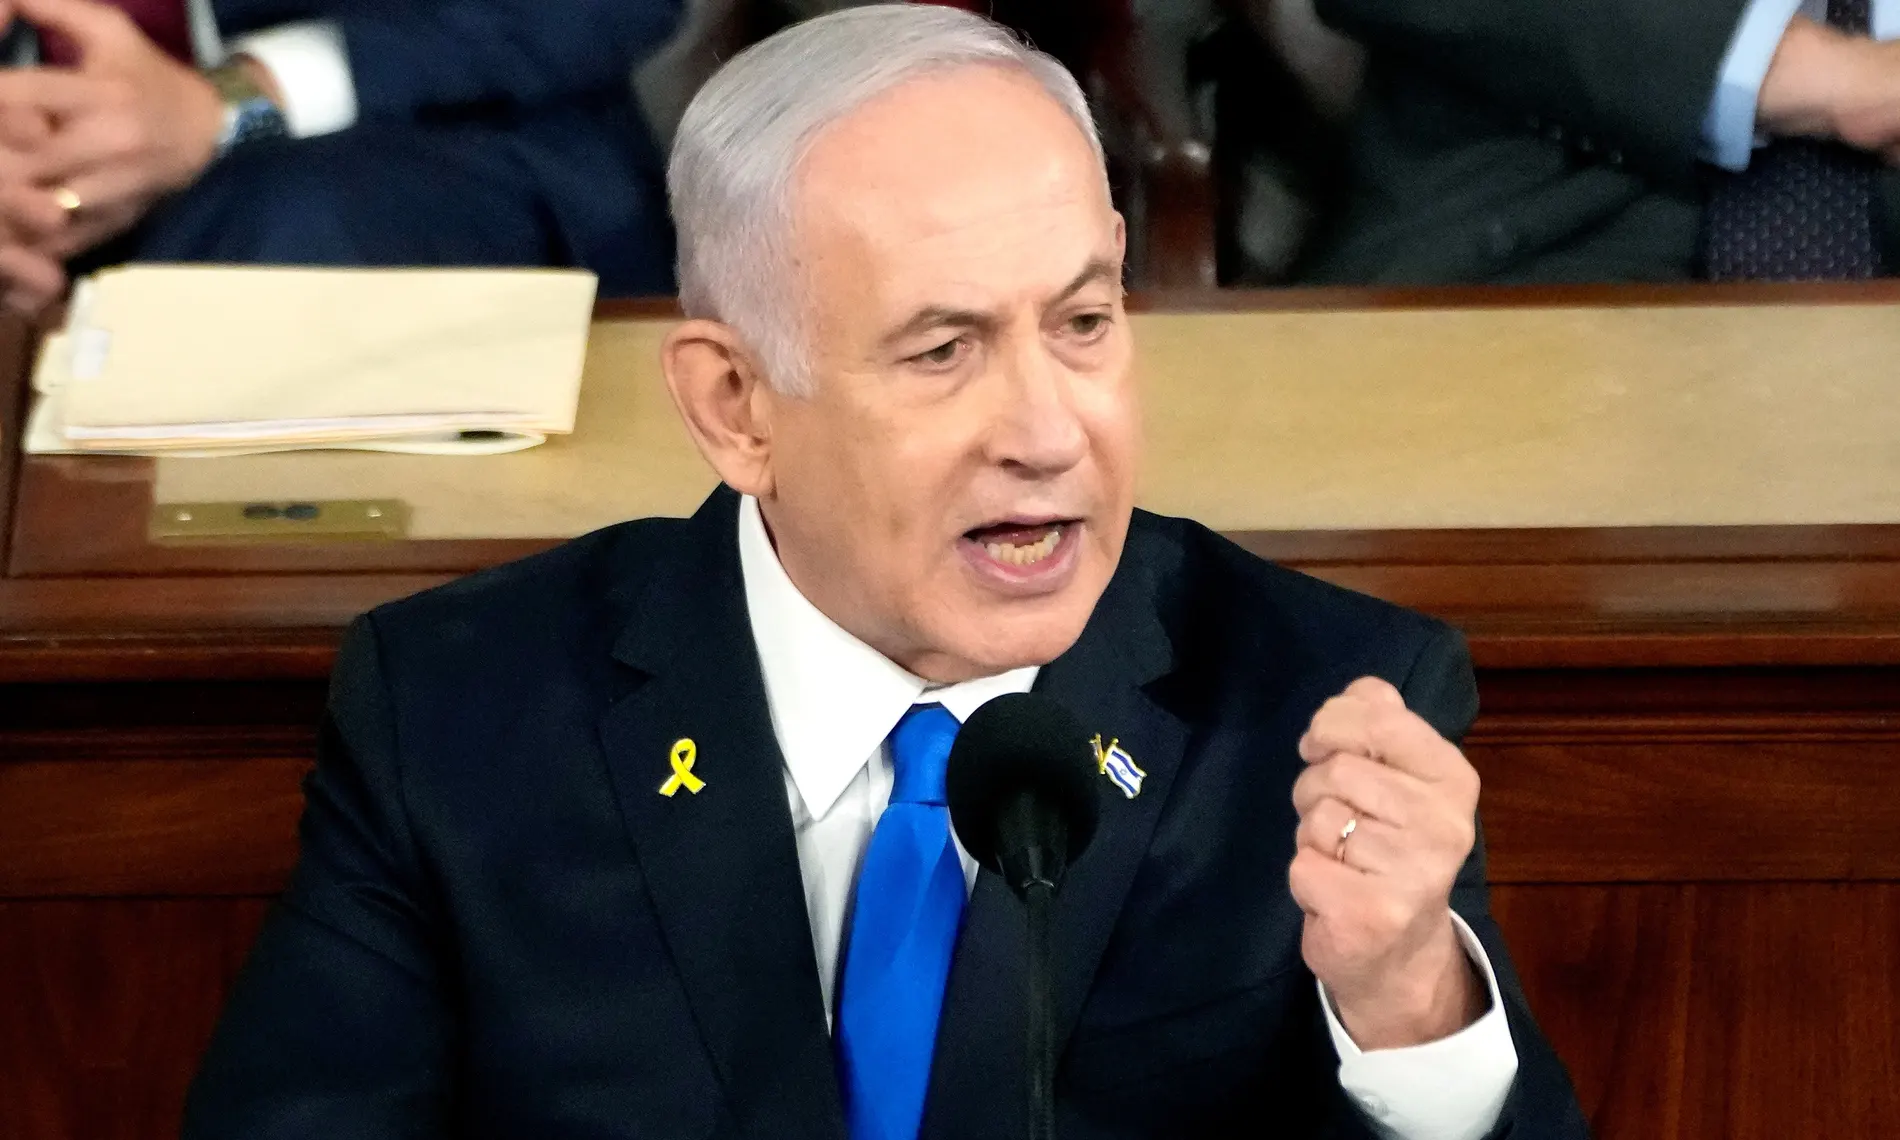 Israeli Prime Minister Benjamin Netanyahu mocks gay pro-Palestinian protestors in a speech to Congress